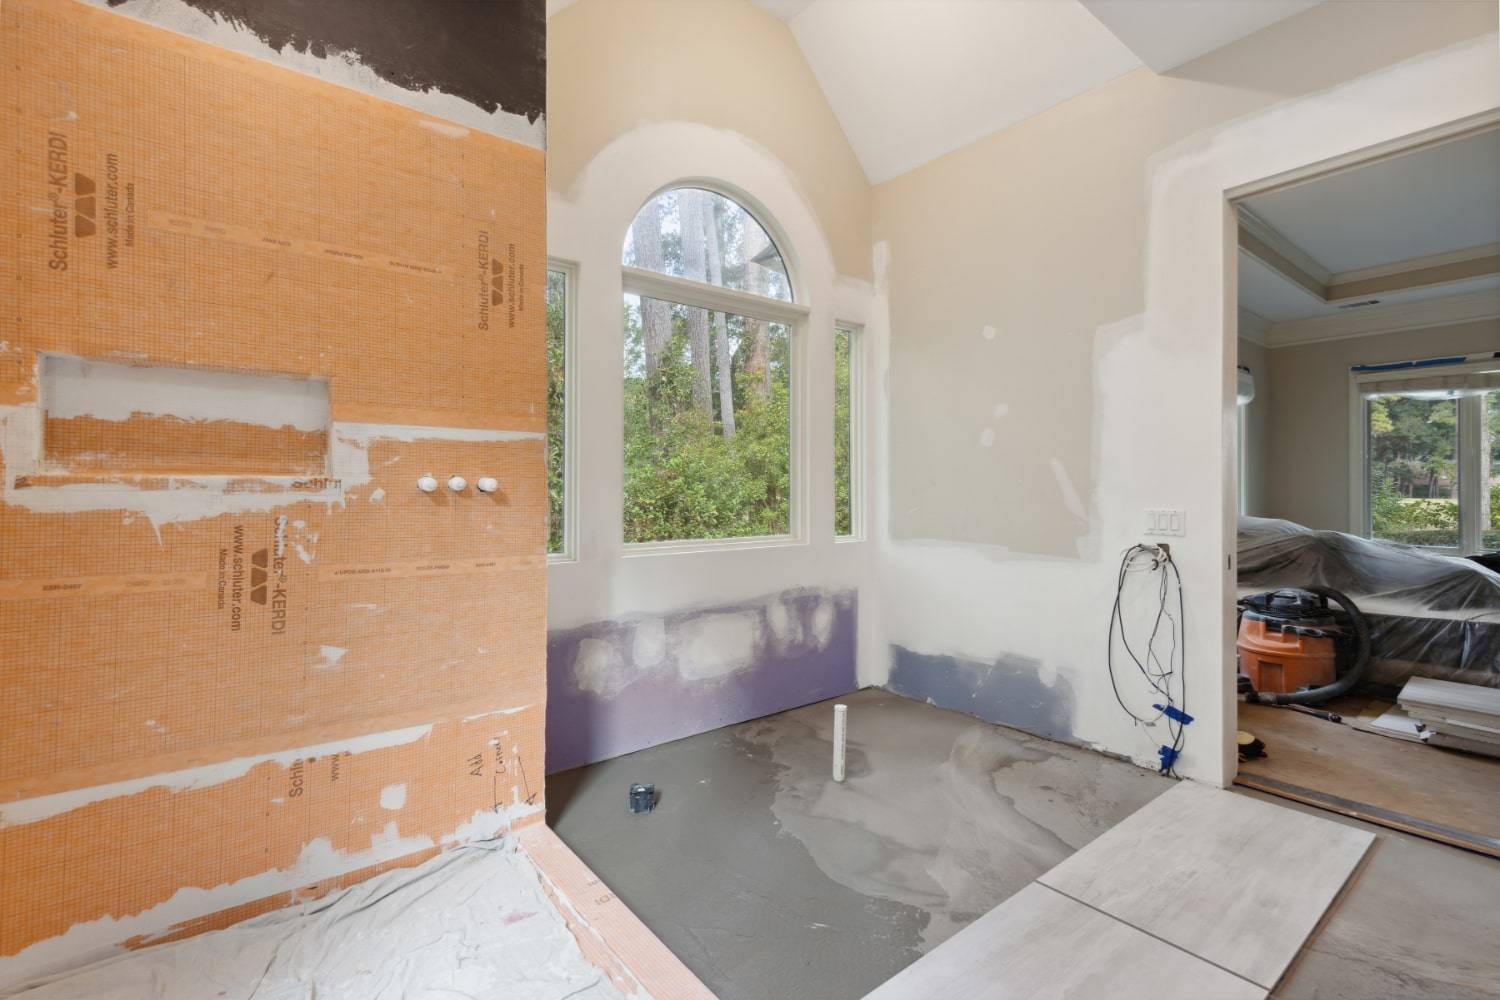 Winslow Design Studio is the Hilton Head Island leader in custom bathroom renovations